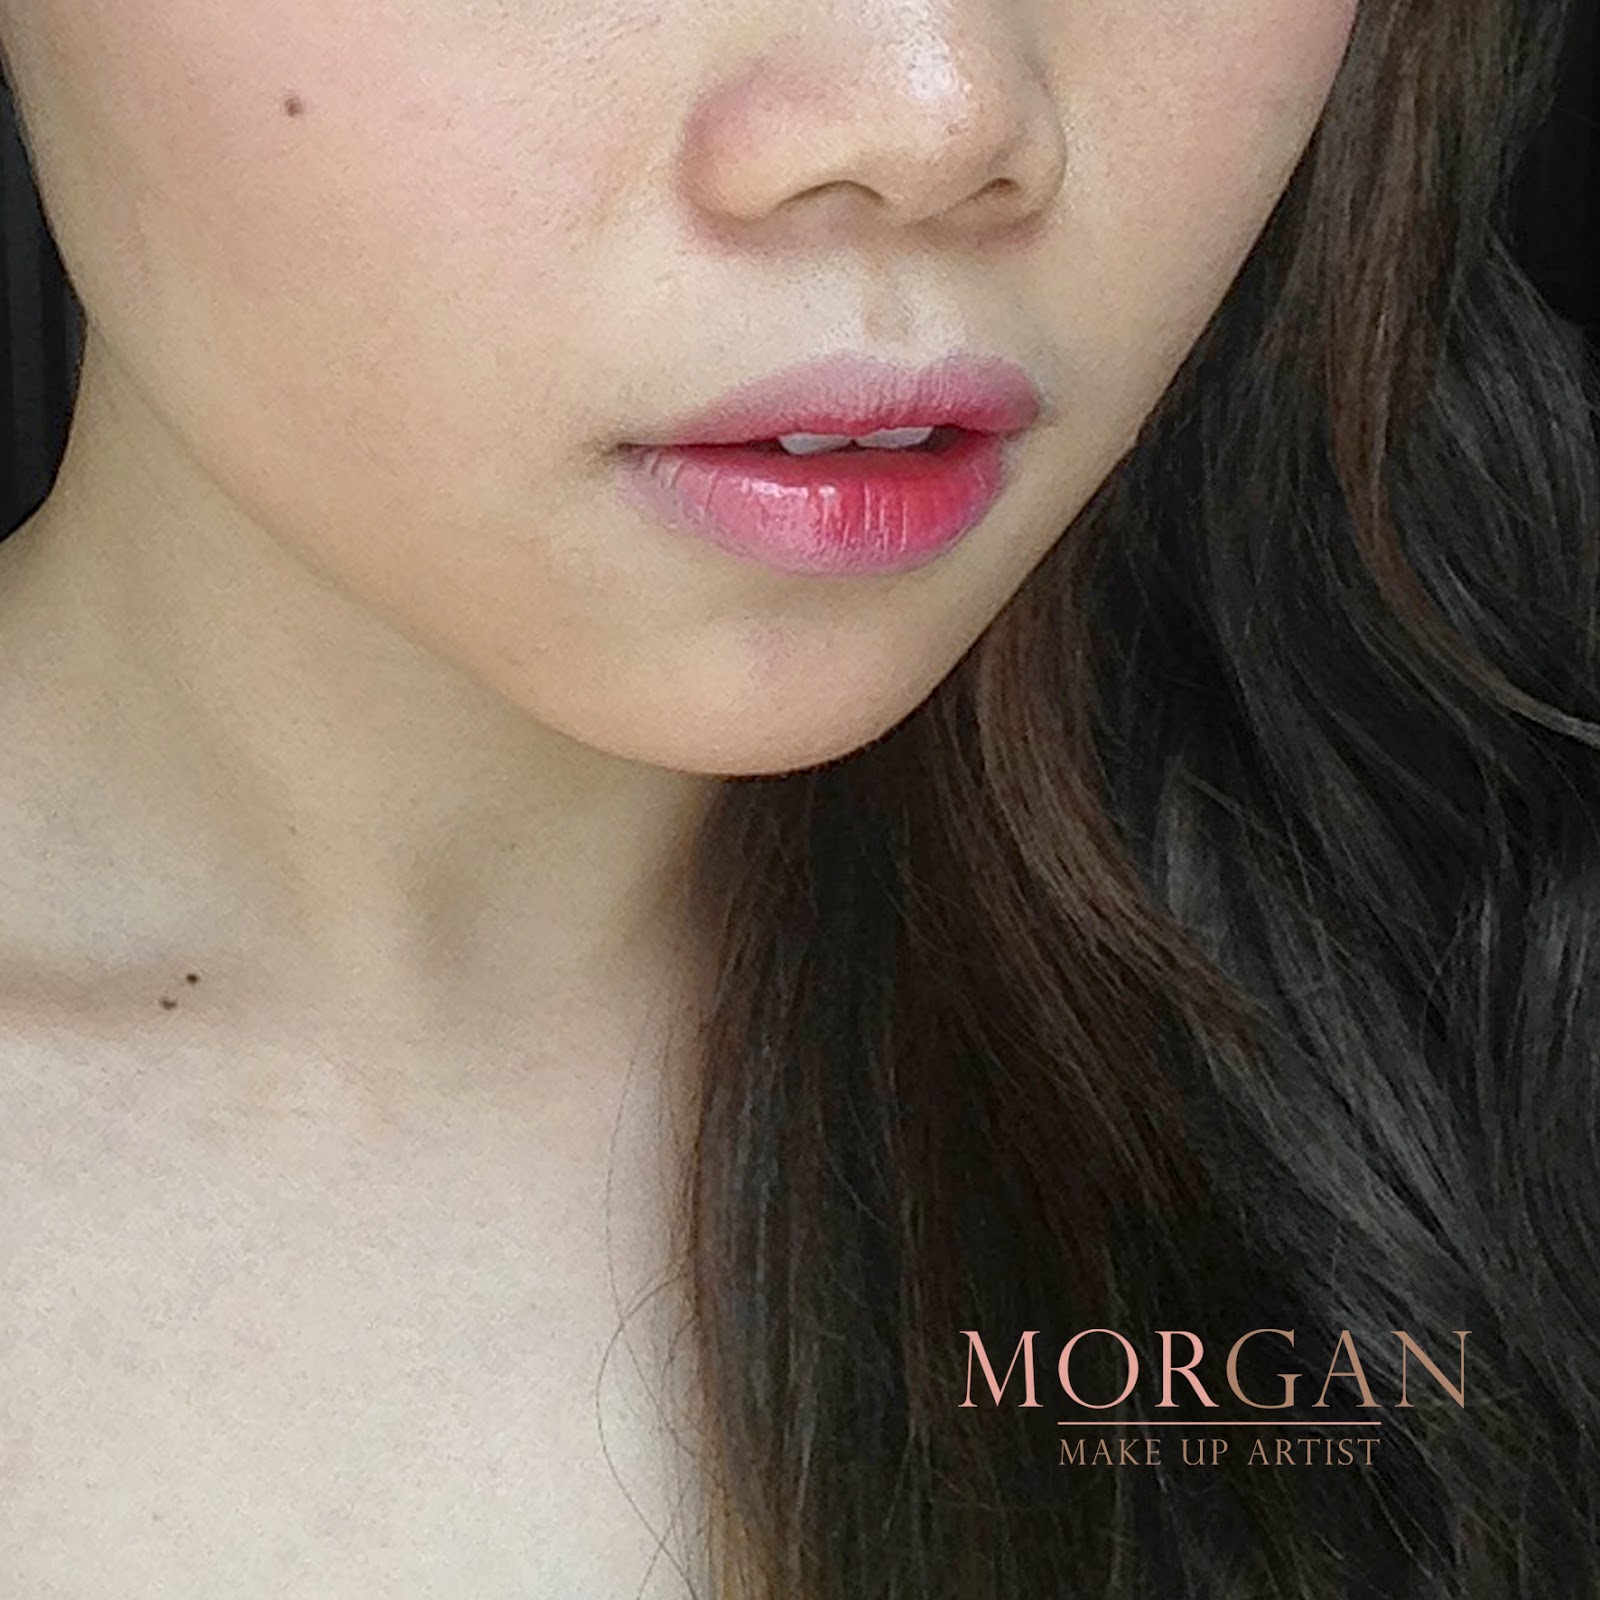 Morgan Make Up Artist February 2015